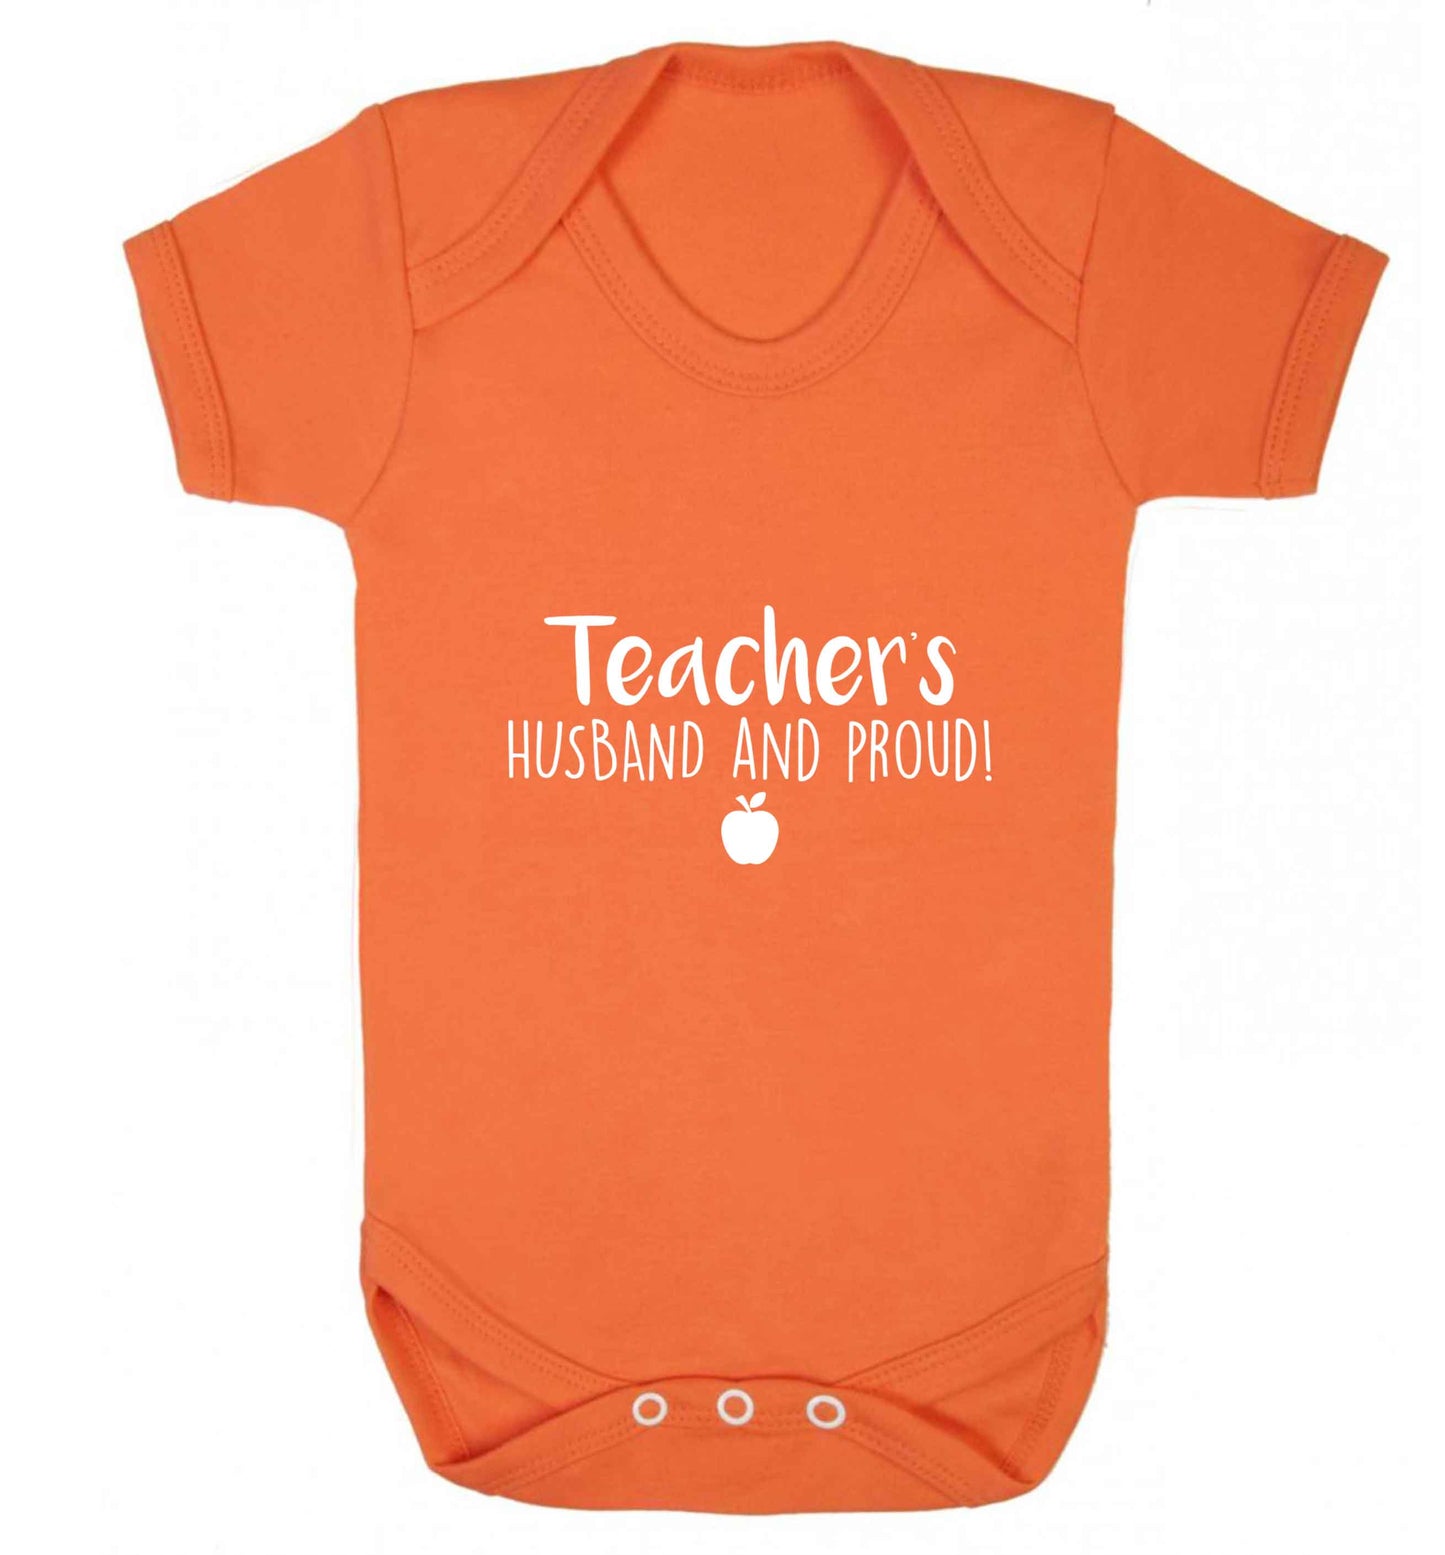 Teachers husband and proud baby vest orange 18-24 months